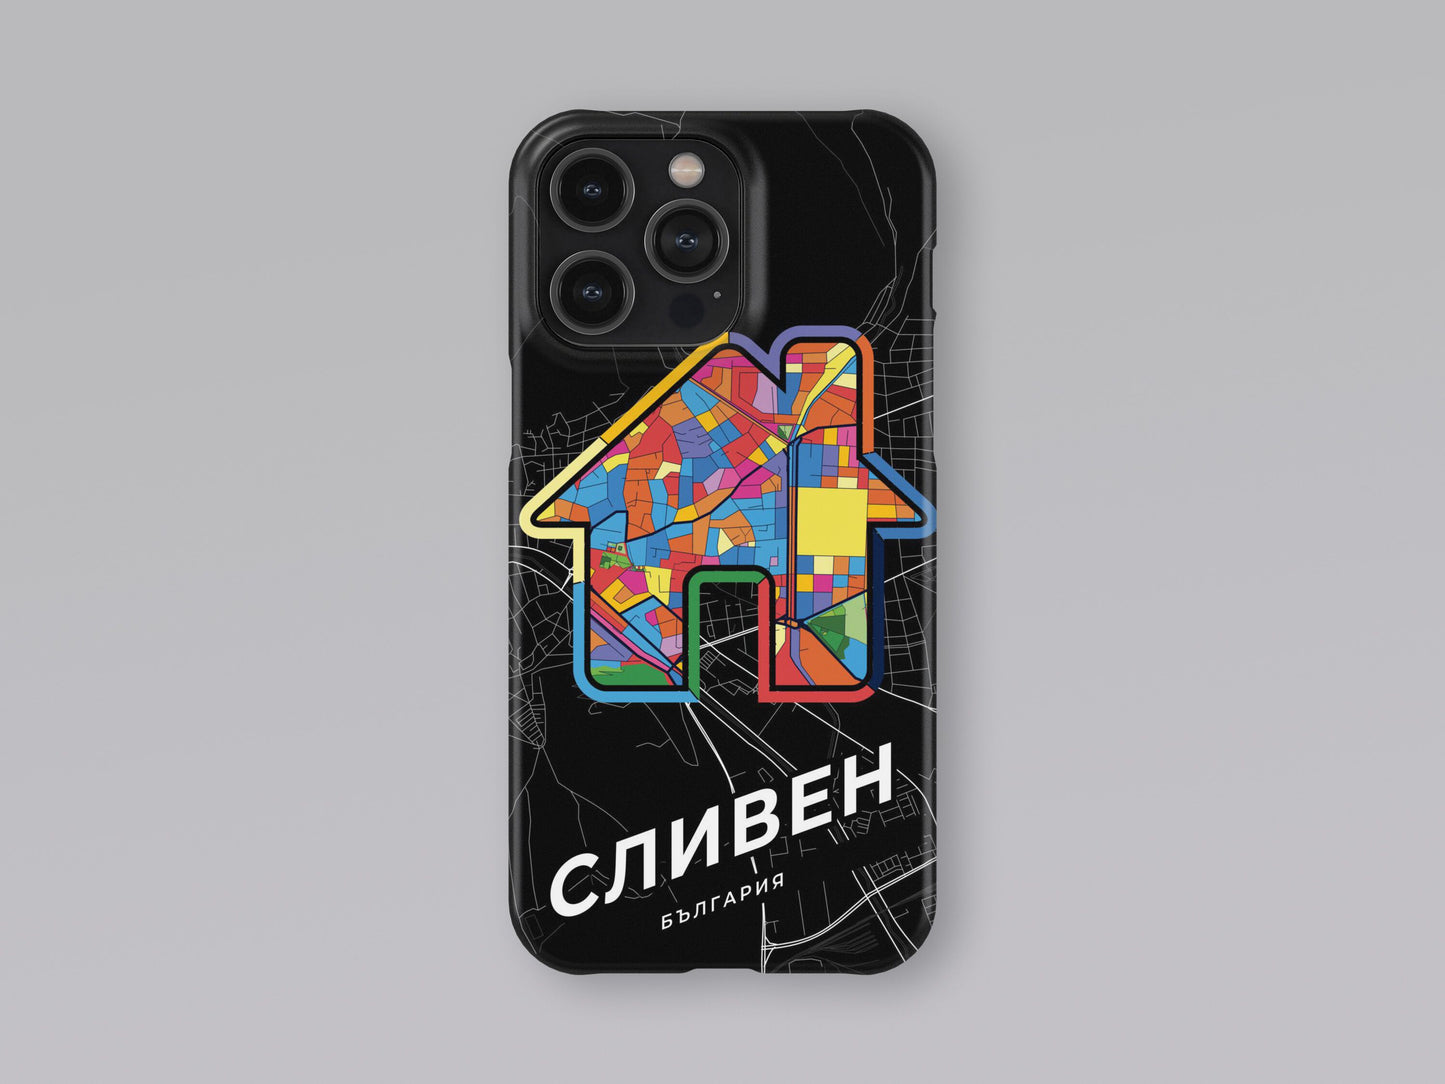 Сливен България slim phone case with colorful icon. Birthday, wedding or housewarming gift. Couple match cases. 3